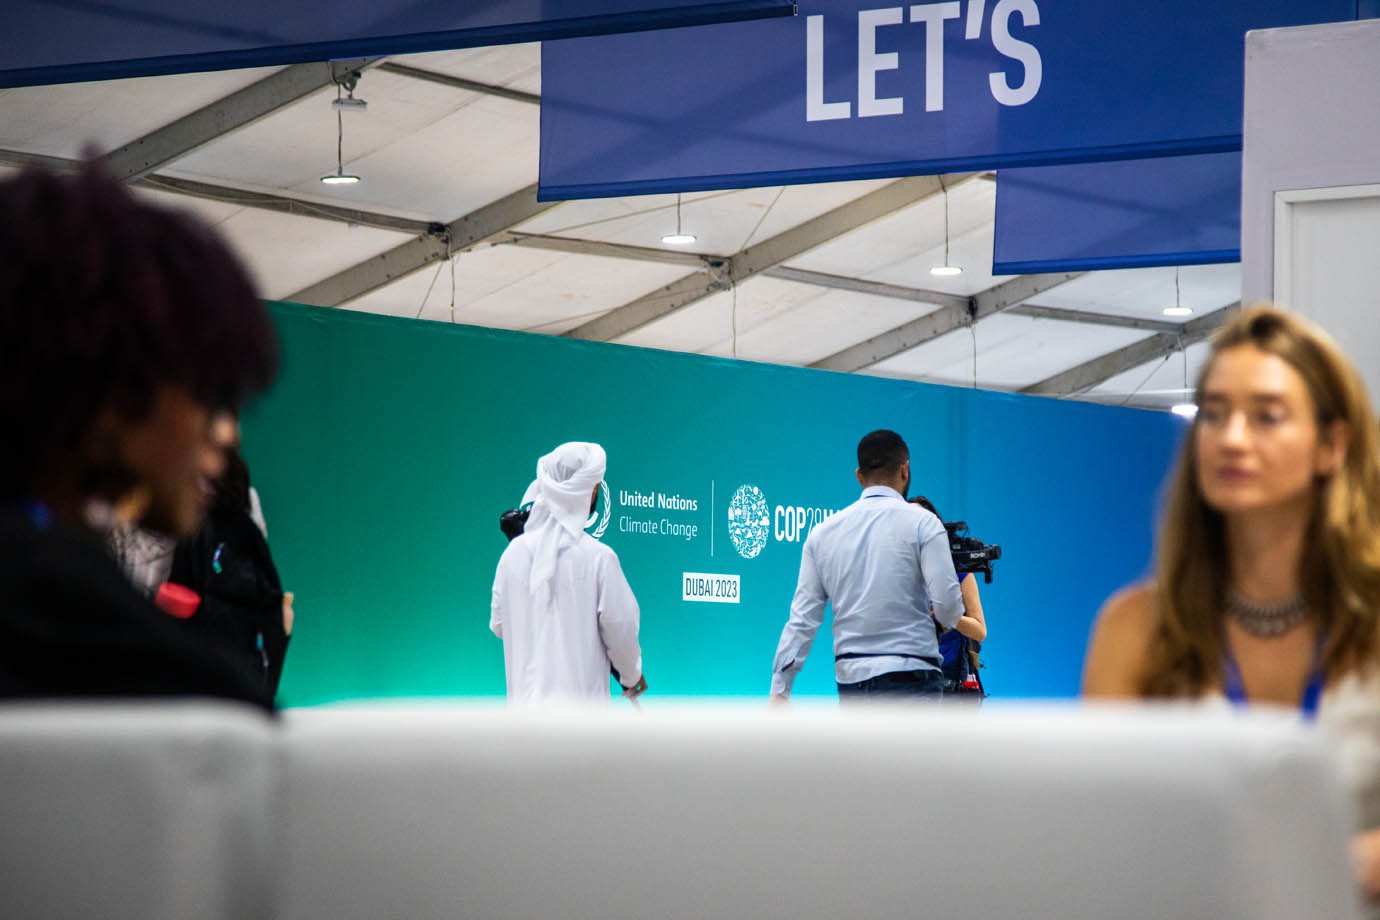 COP28 - Dubai 2023 - Sala de Imprensa

Foto: Leandro Fonseca - @leofonsa